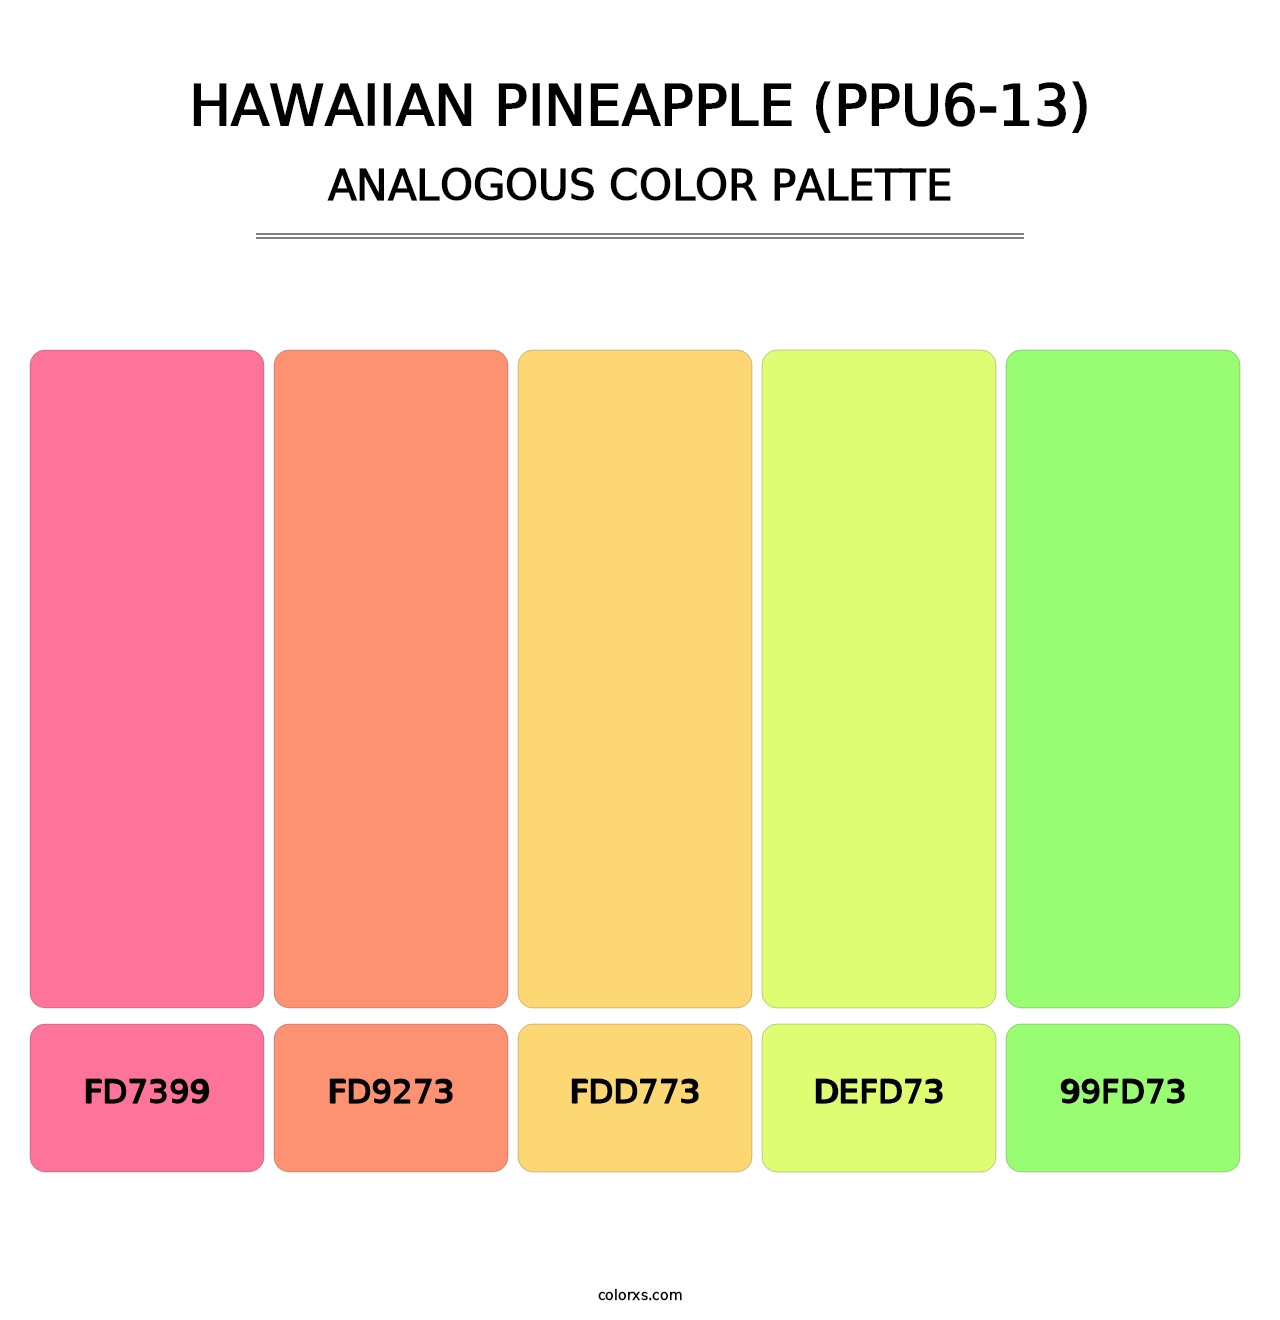 Hawaiian Pineapple (PPU6-13) - Analogous Color Palette